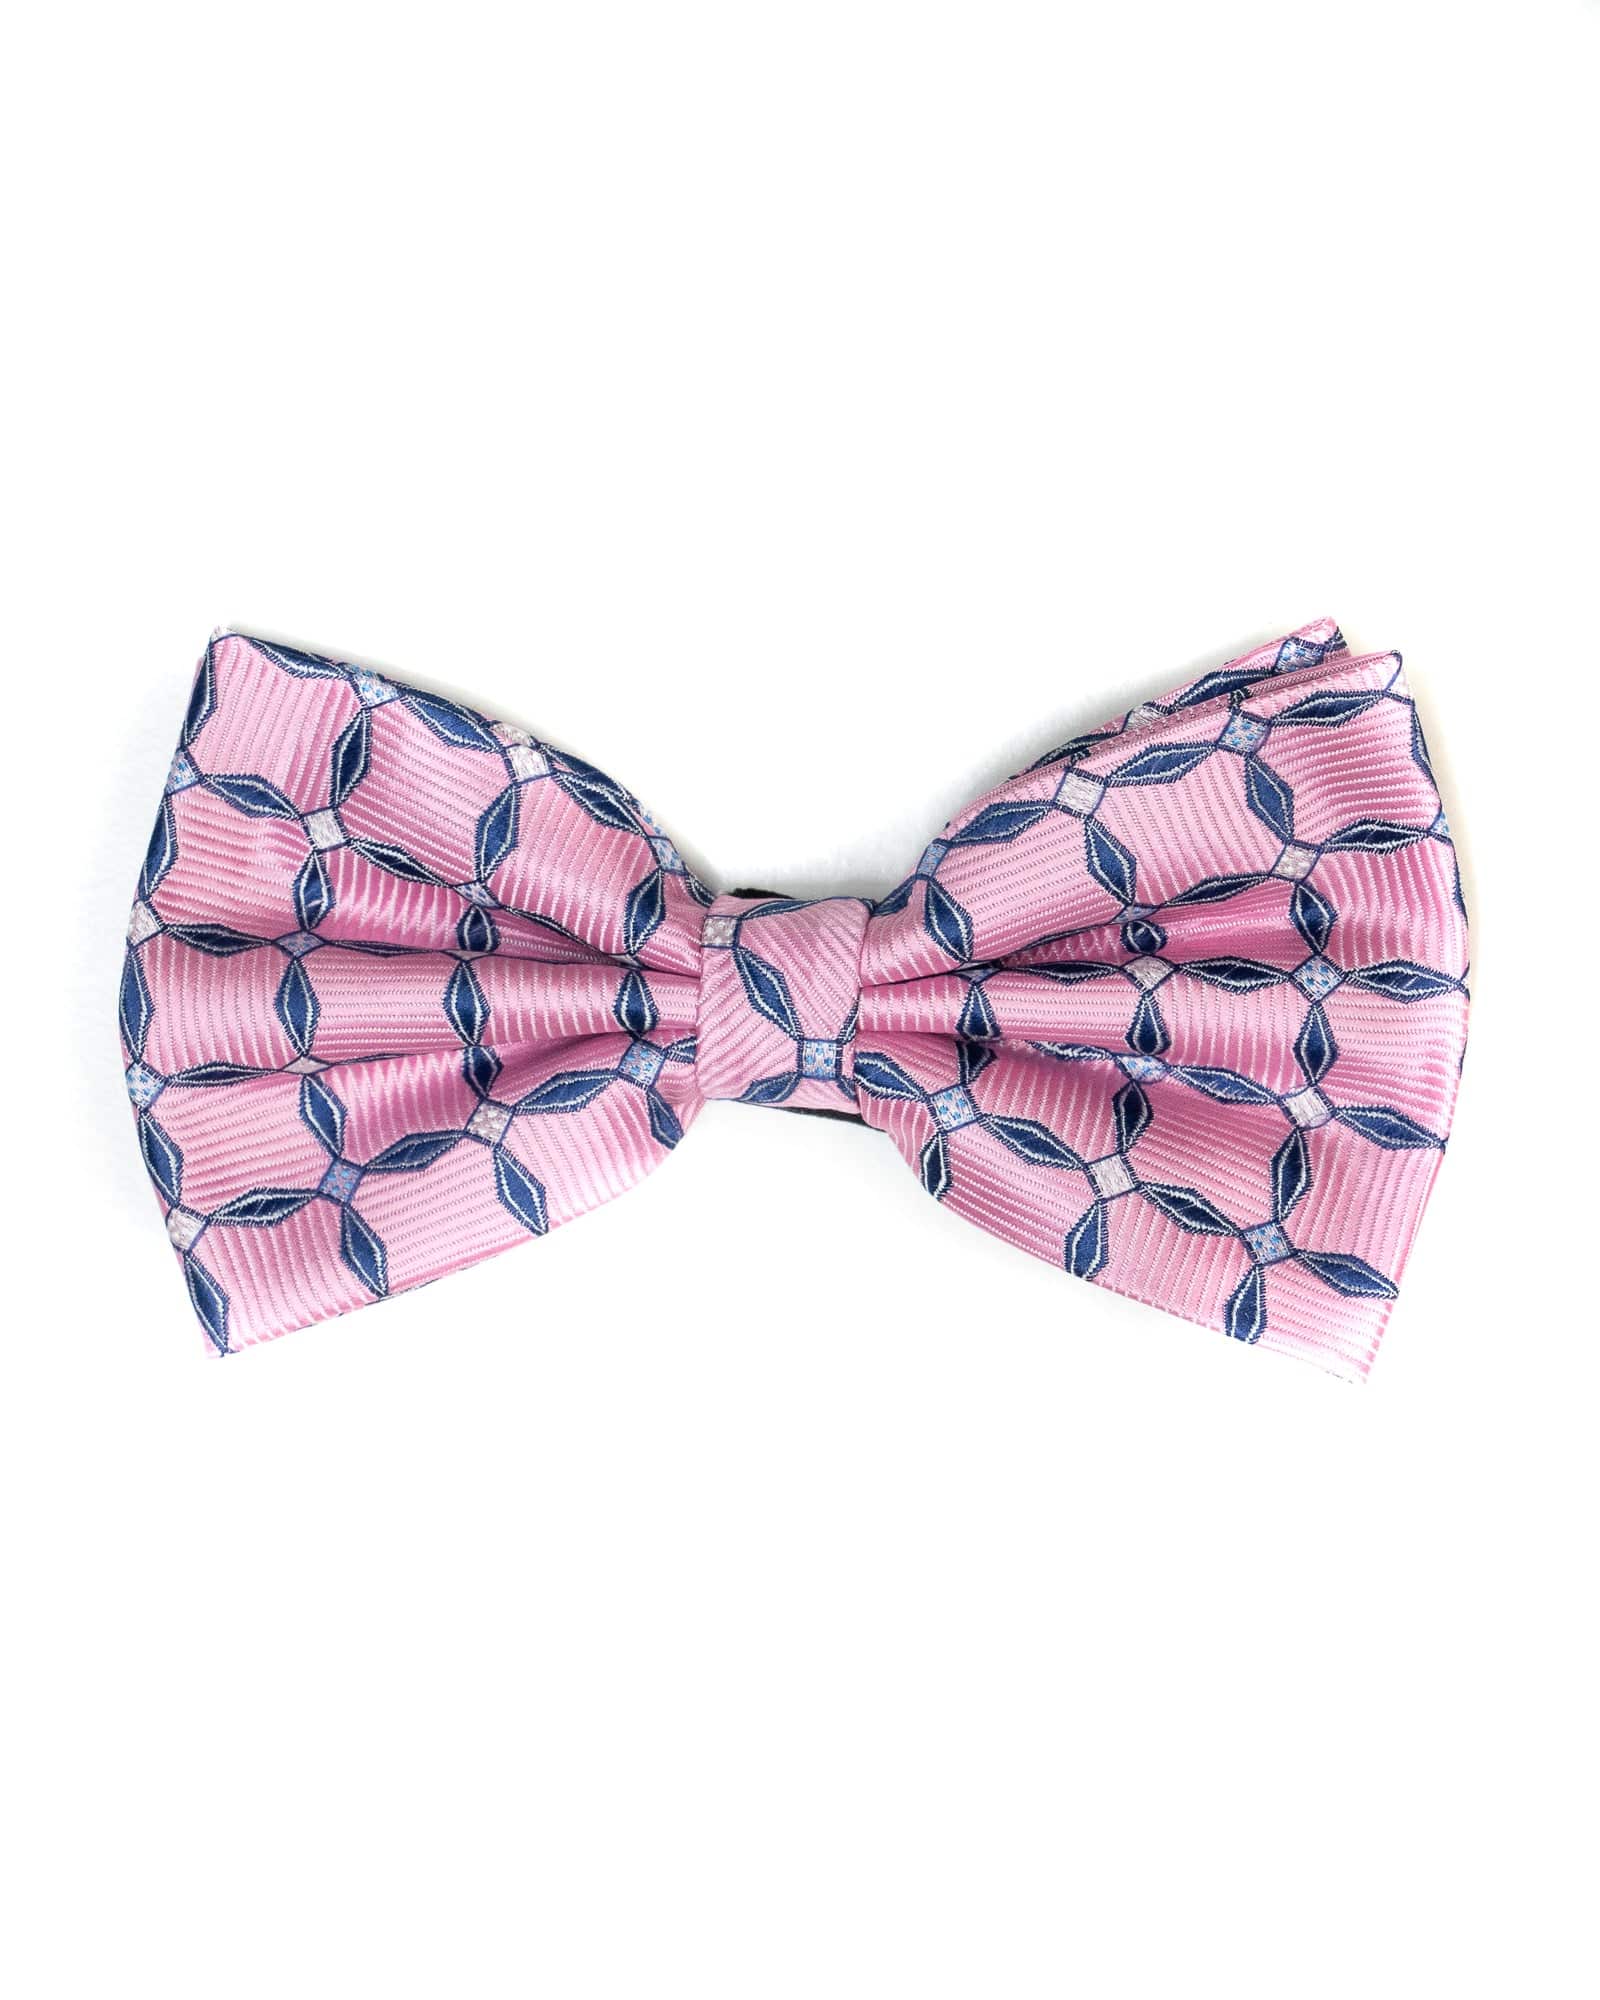 Bow Tie In Foulard Pattern Pink & Navy - Rainwater's Men's Clothing and Tuxedo Rental